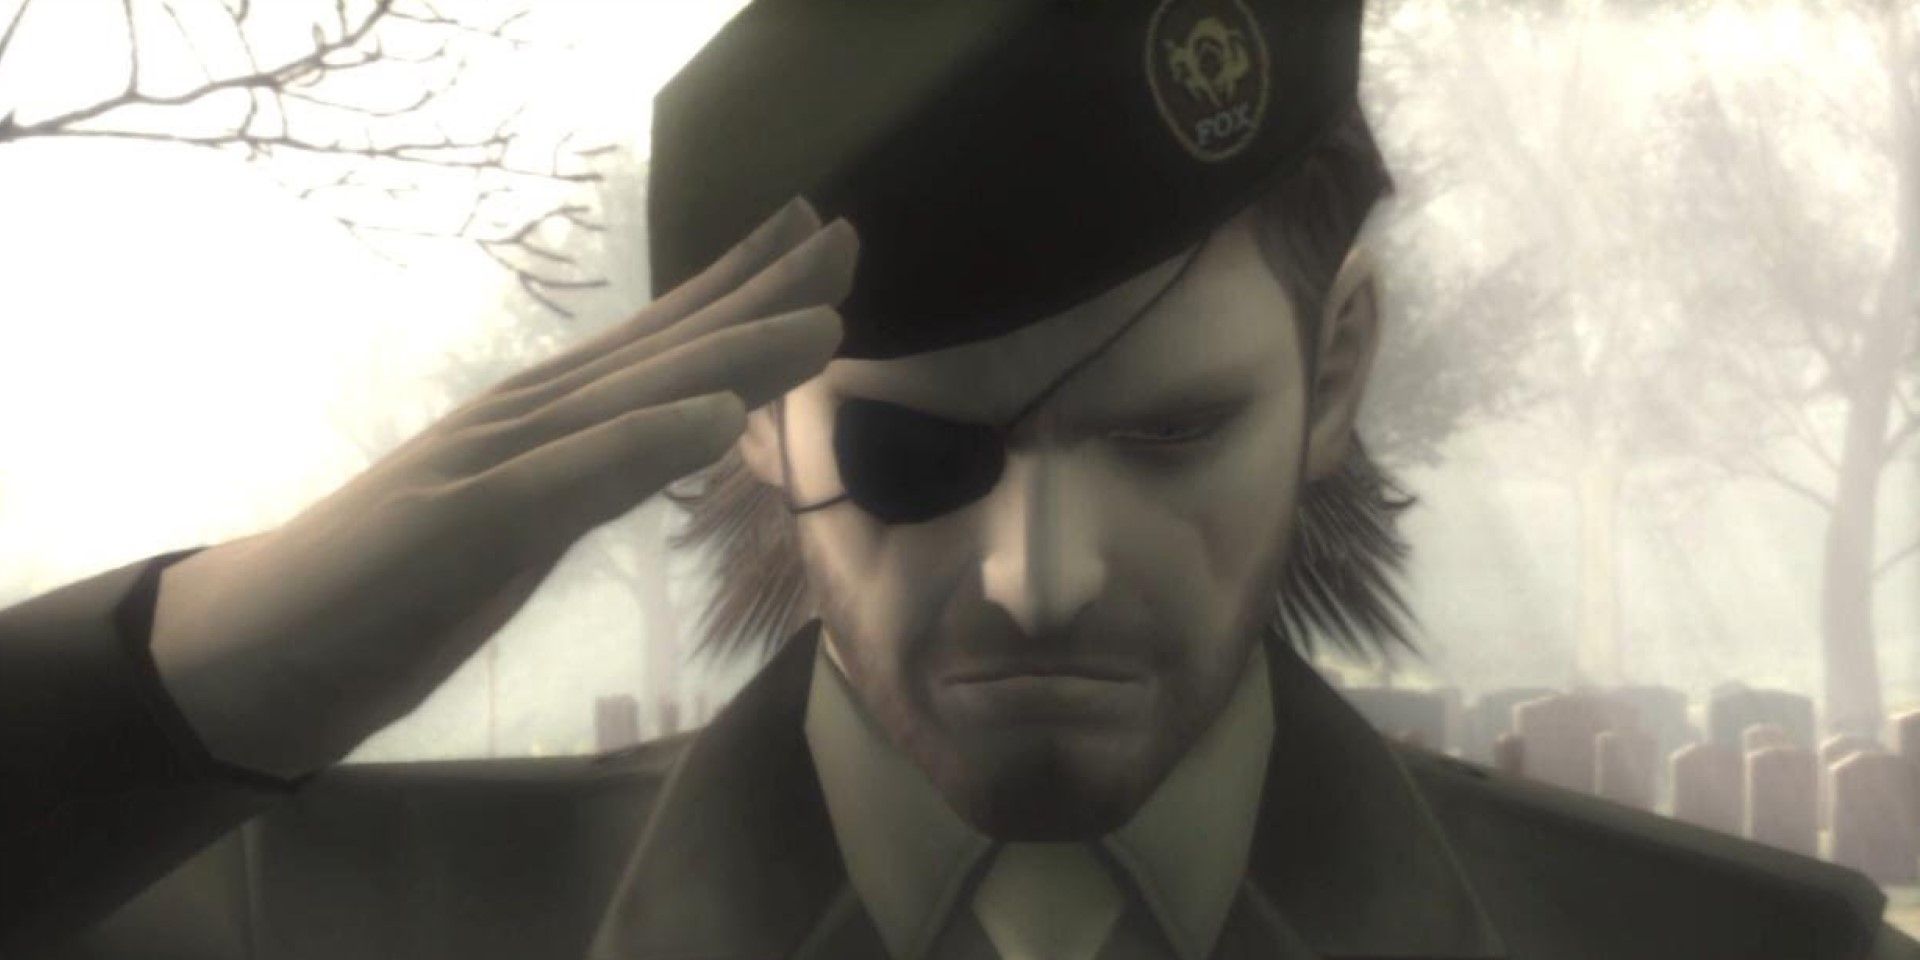 Naked Snake (Big Boss) saluting The Boss' grave in Metal Gear Solid 3 Snake Eater